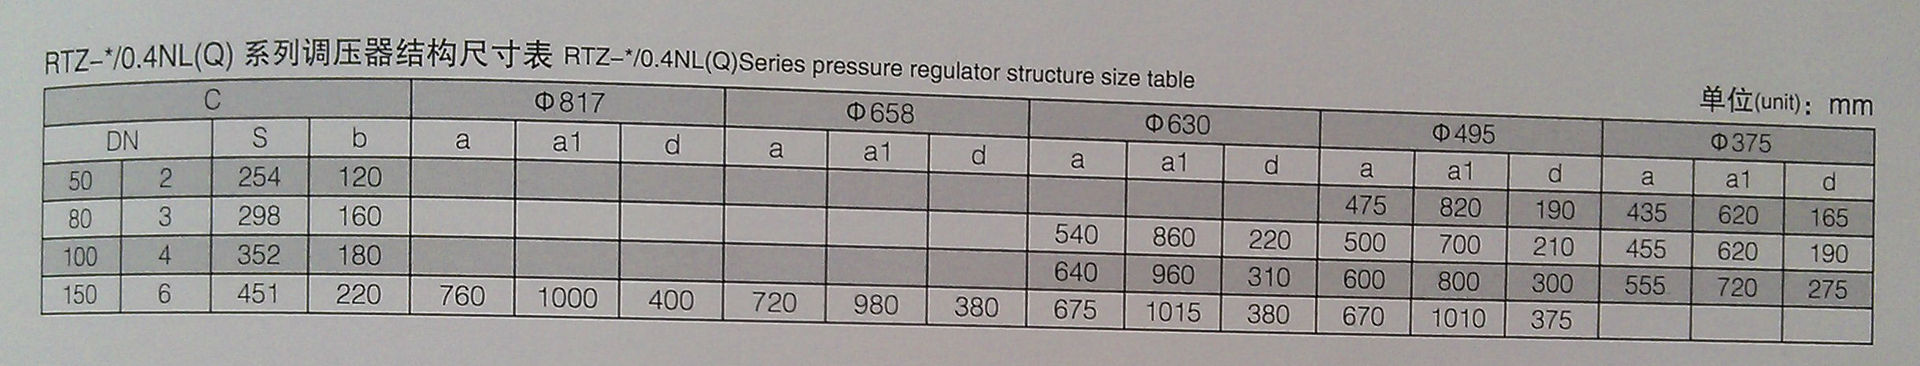 AQ型快速反应自带切断燃气调压器尺寸表